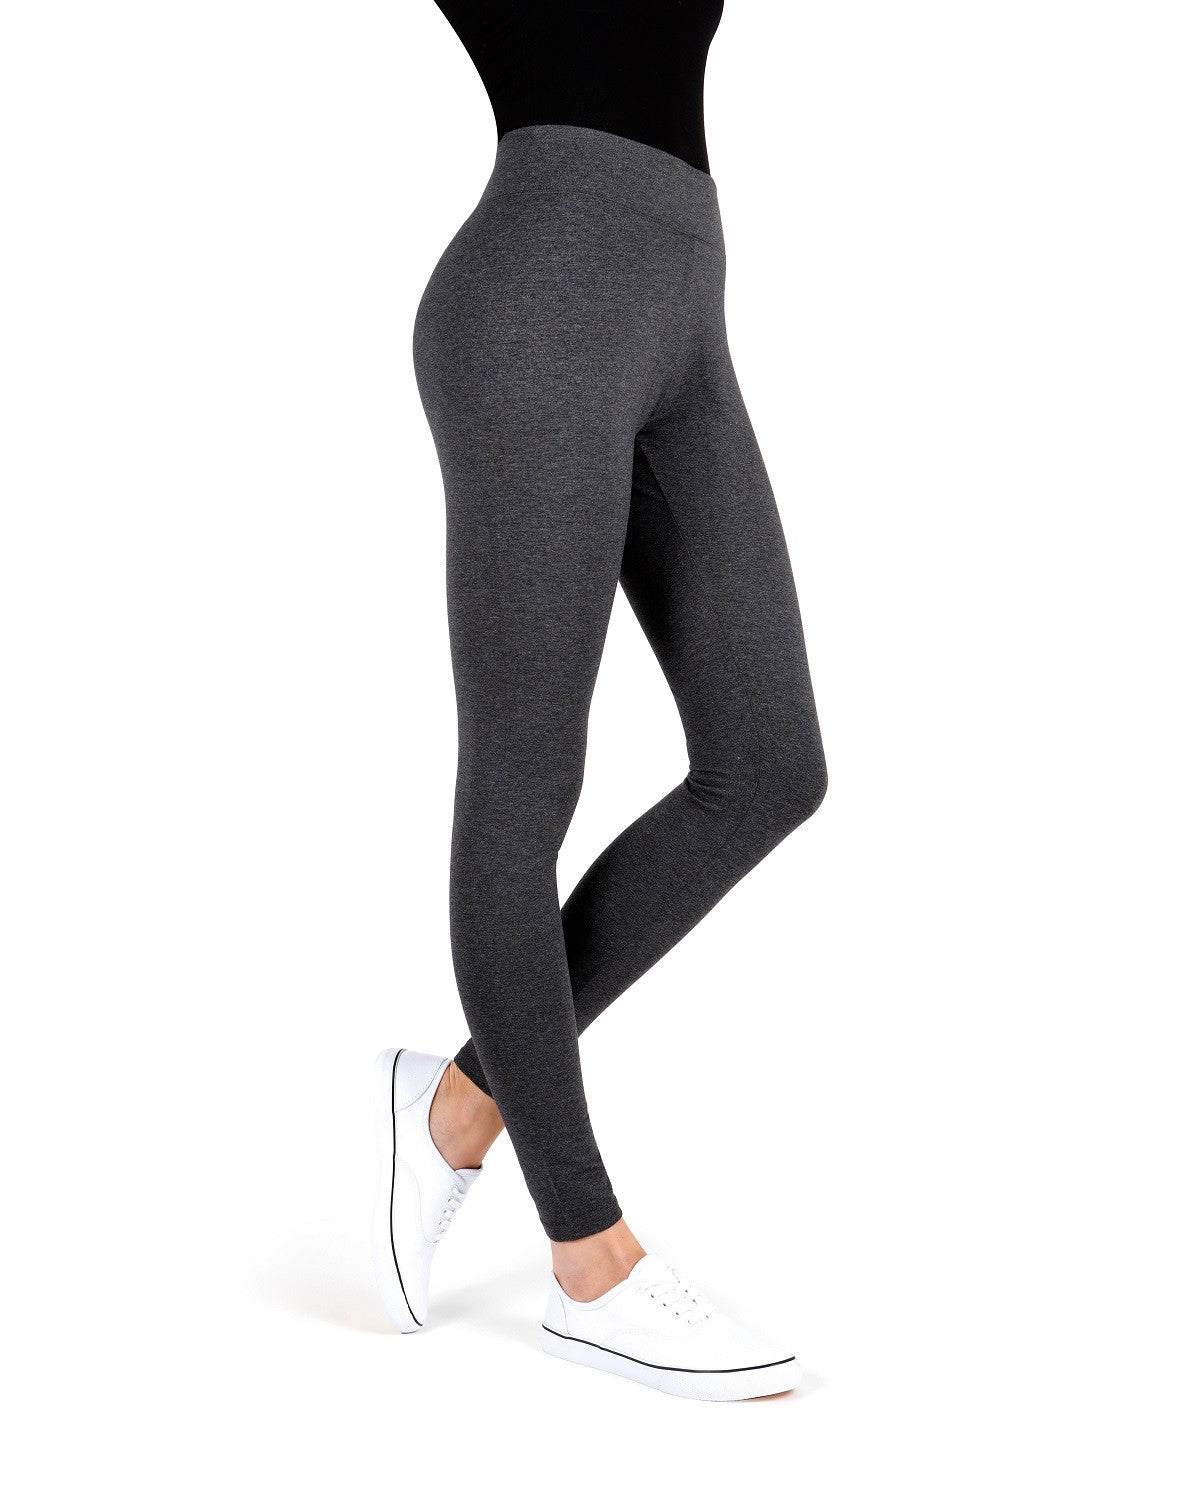 leggings for women cotton with lace : Matymats Workout Leggings